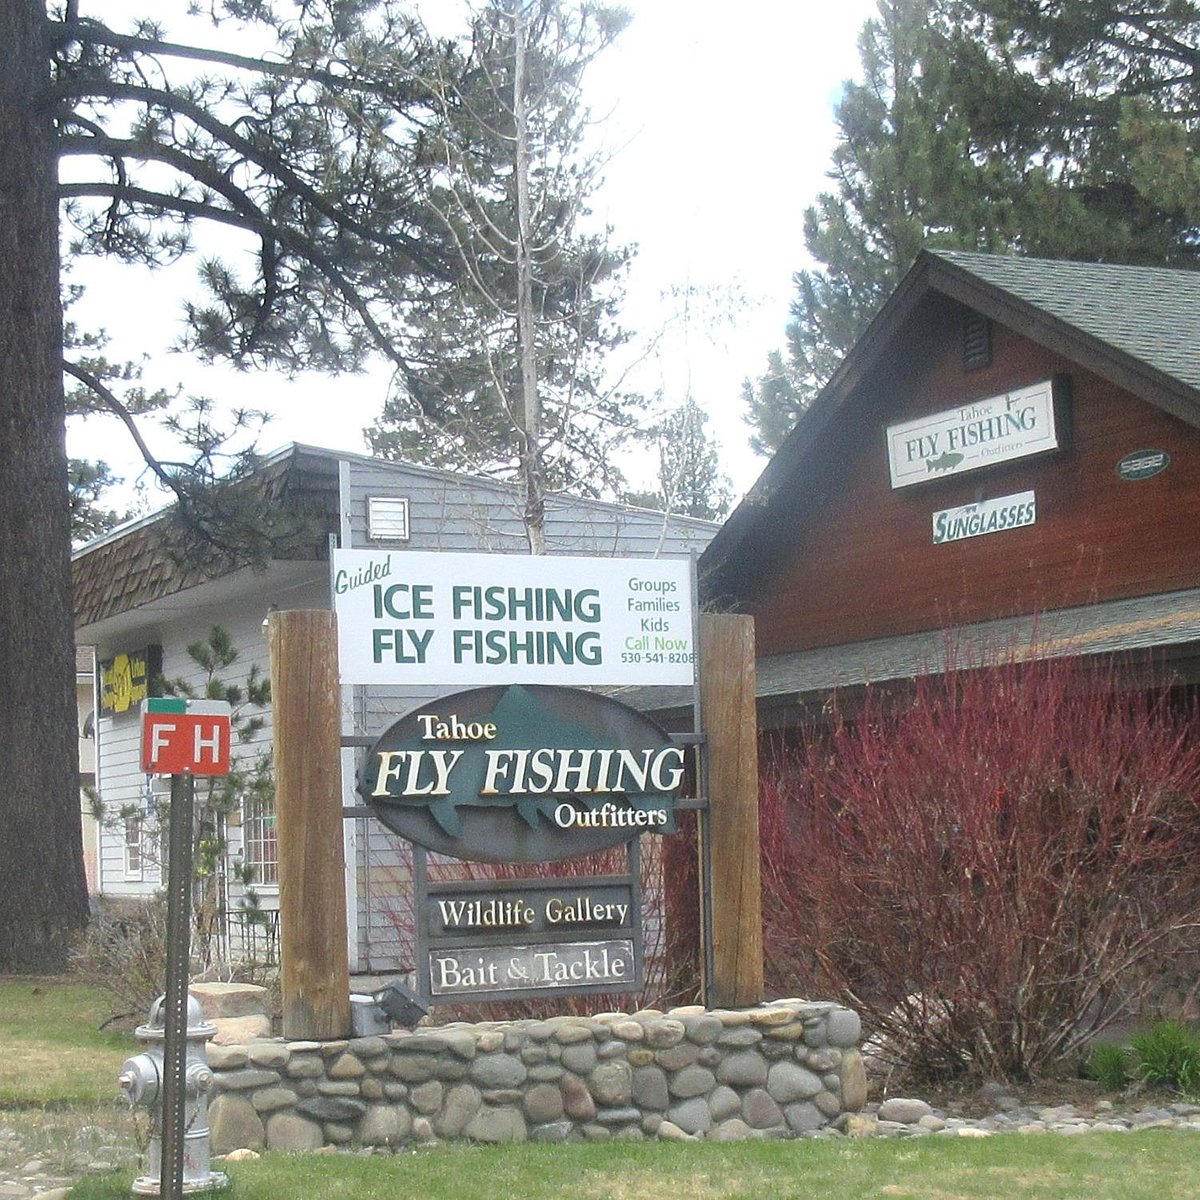 East Carson River Fly Fishing Guide Trips near South Lake Tahoe California